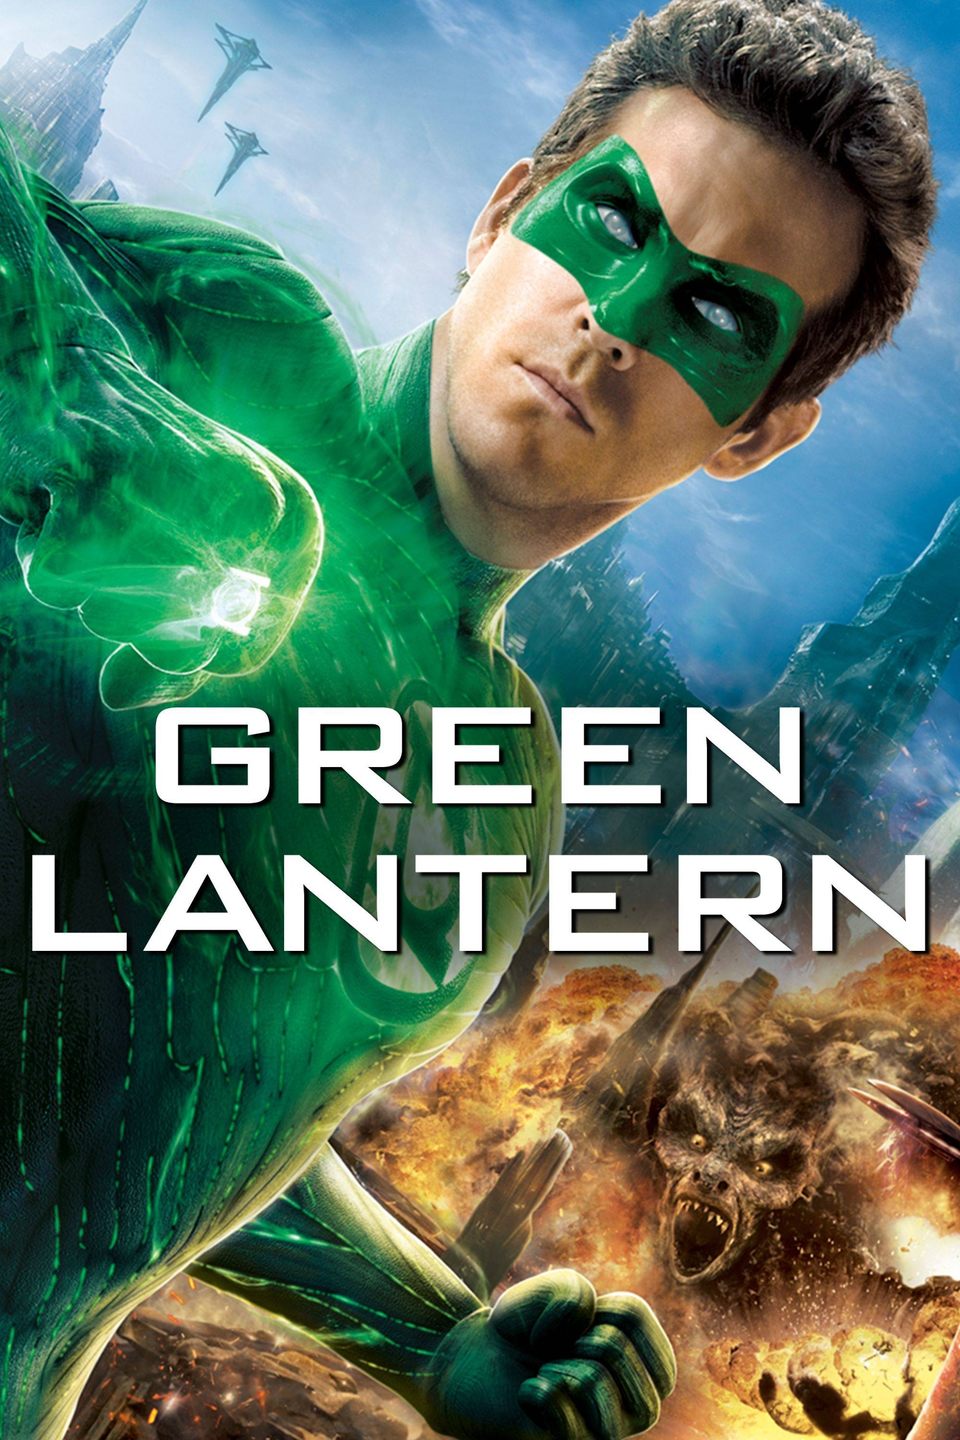 Film Green Lantern